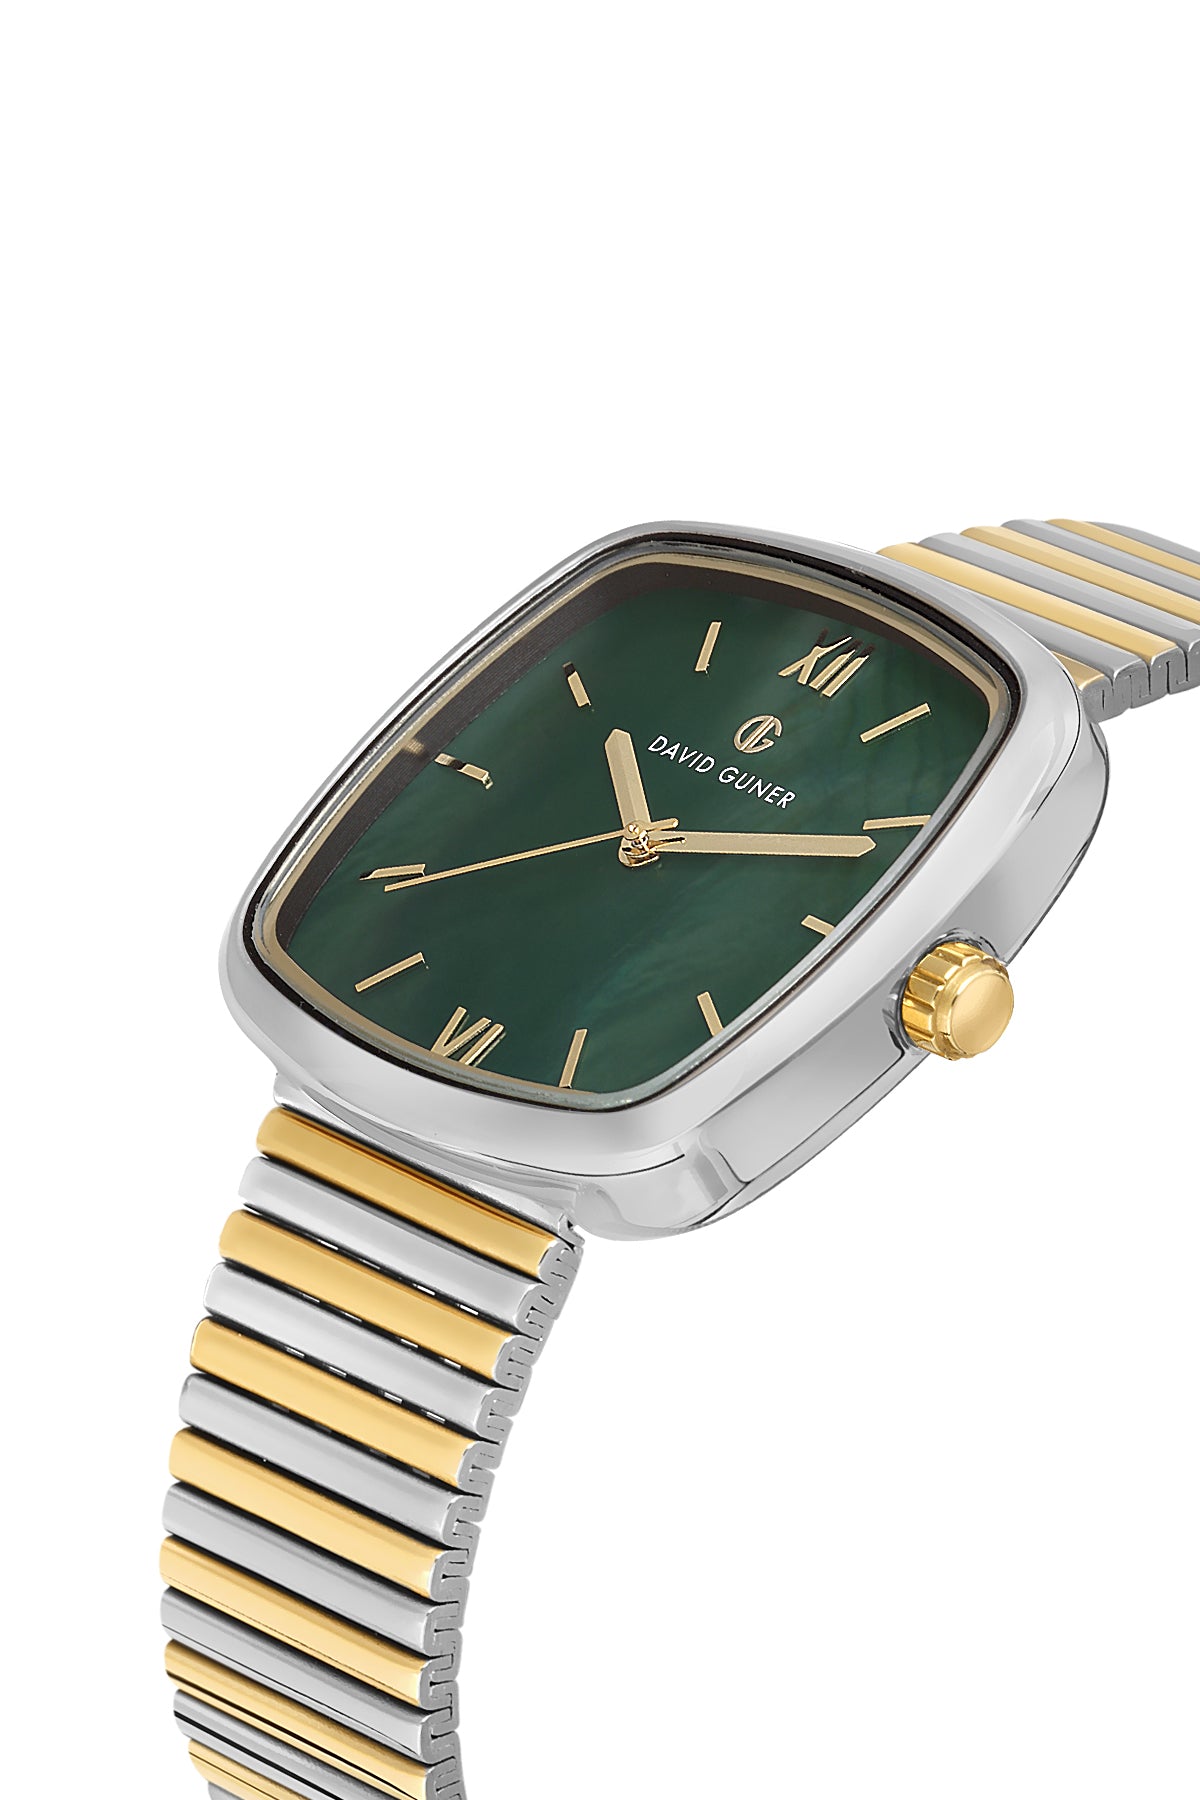 DAVID GUNER Green Dial Women's Wristwatch